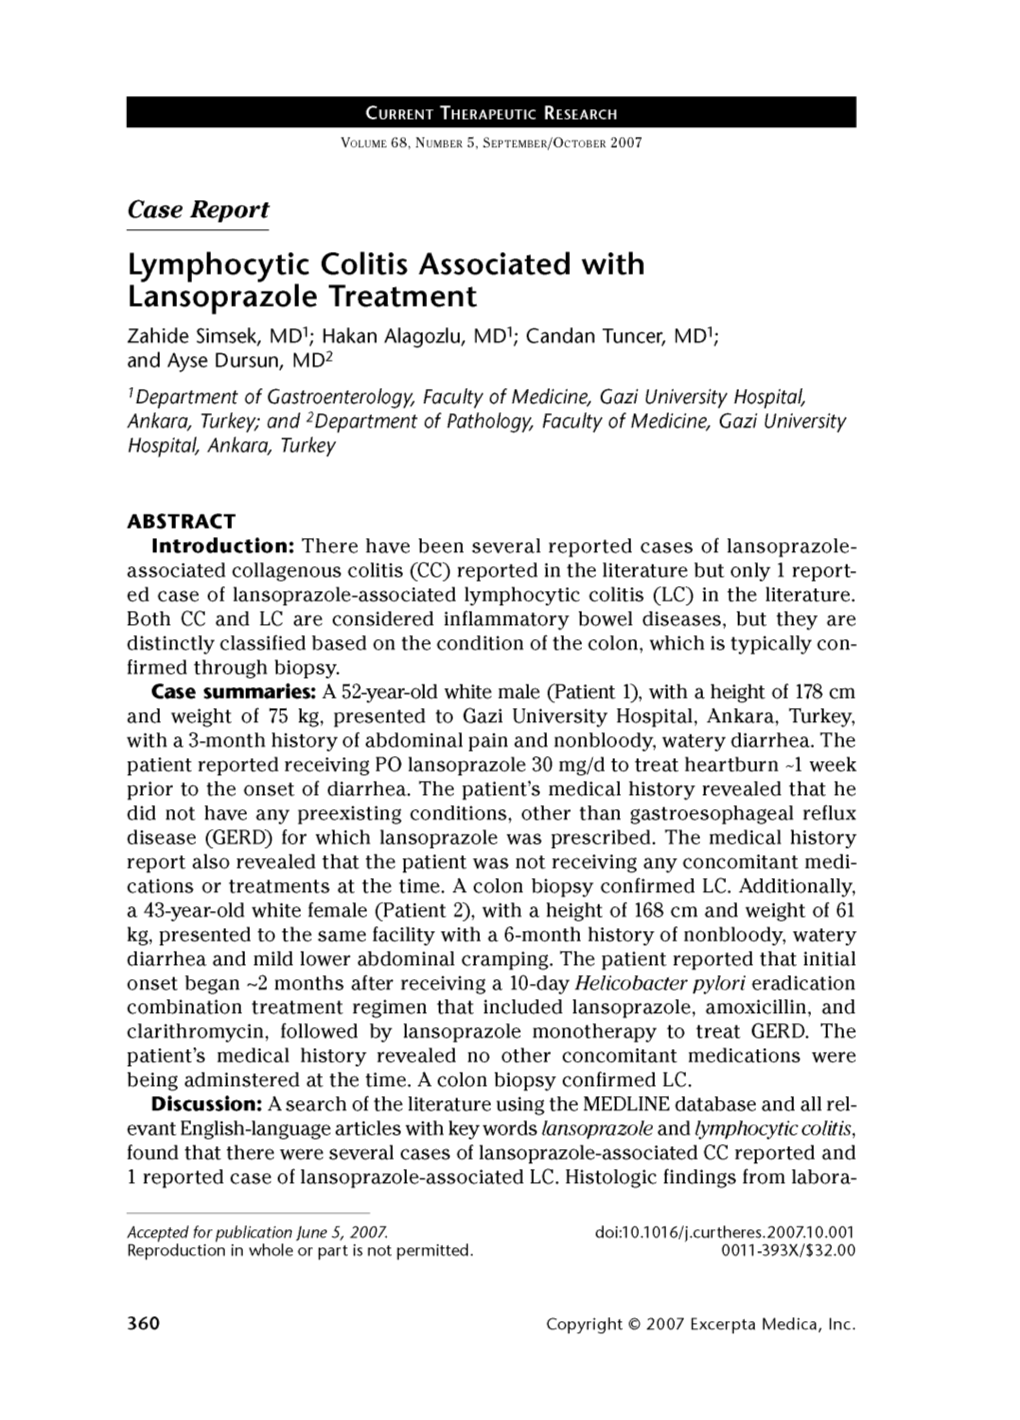 Lymphocytic Colitis Associated with Lansoprazole Treatment